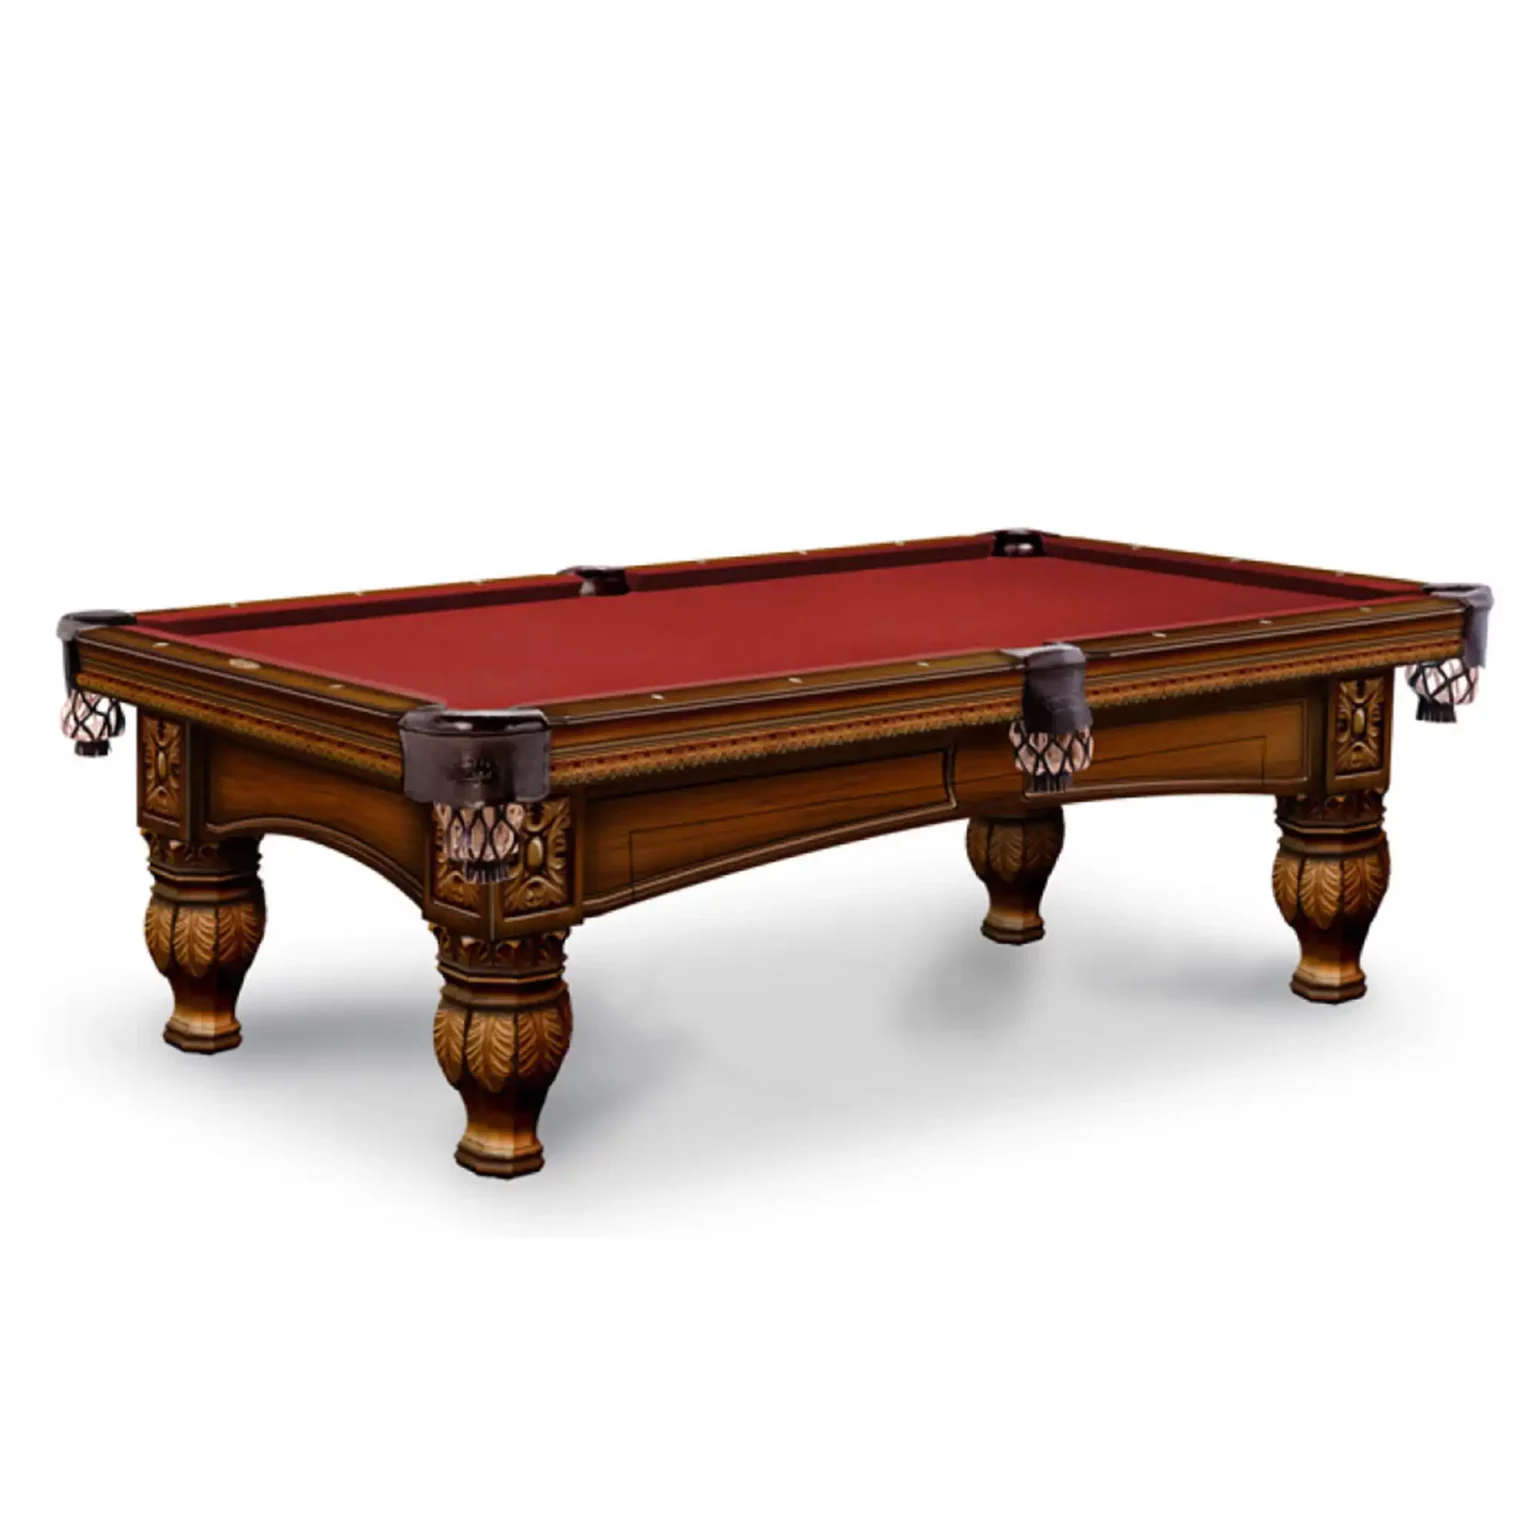 Olhausen Venetian pool table